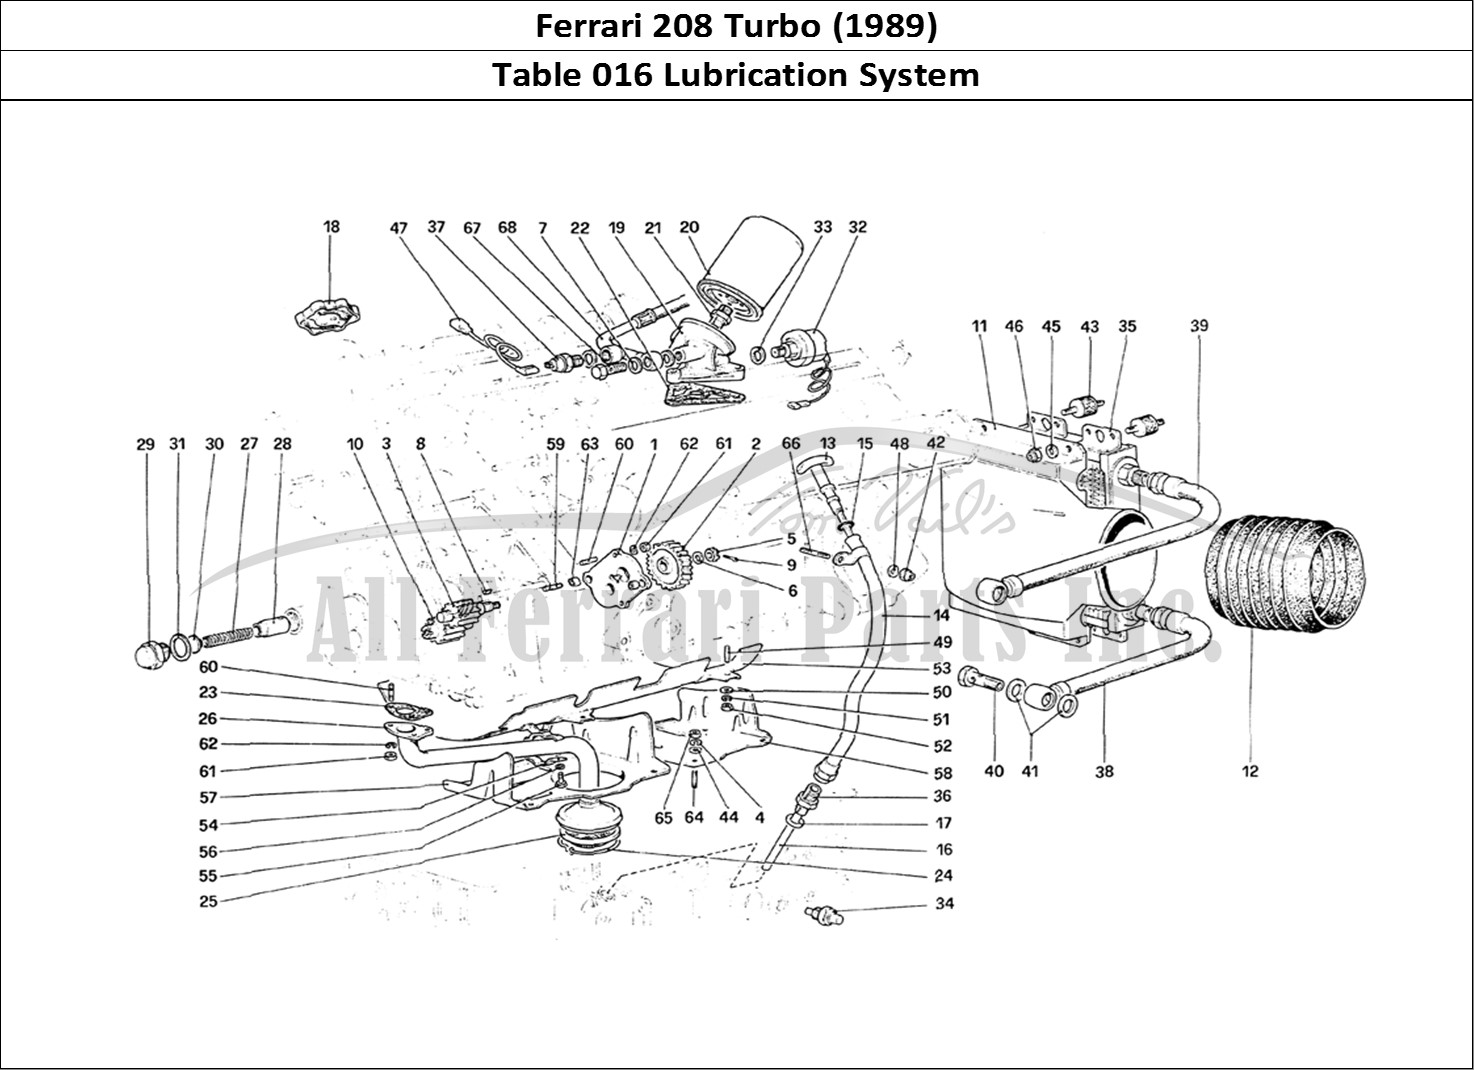 Ferrari Parts Ferrari 208 Turbo (1989) Page 016 Lubrication System